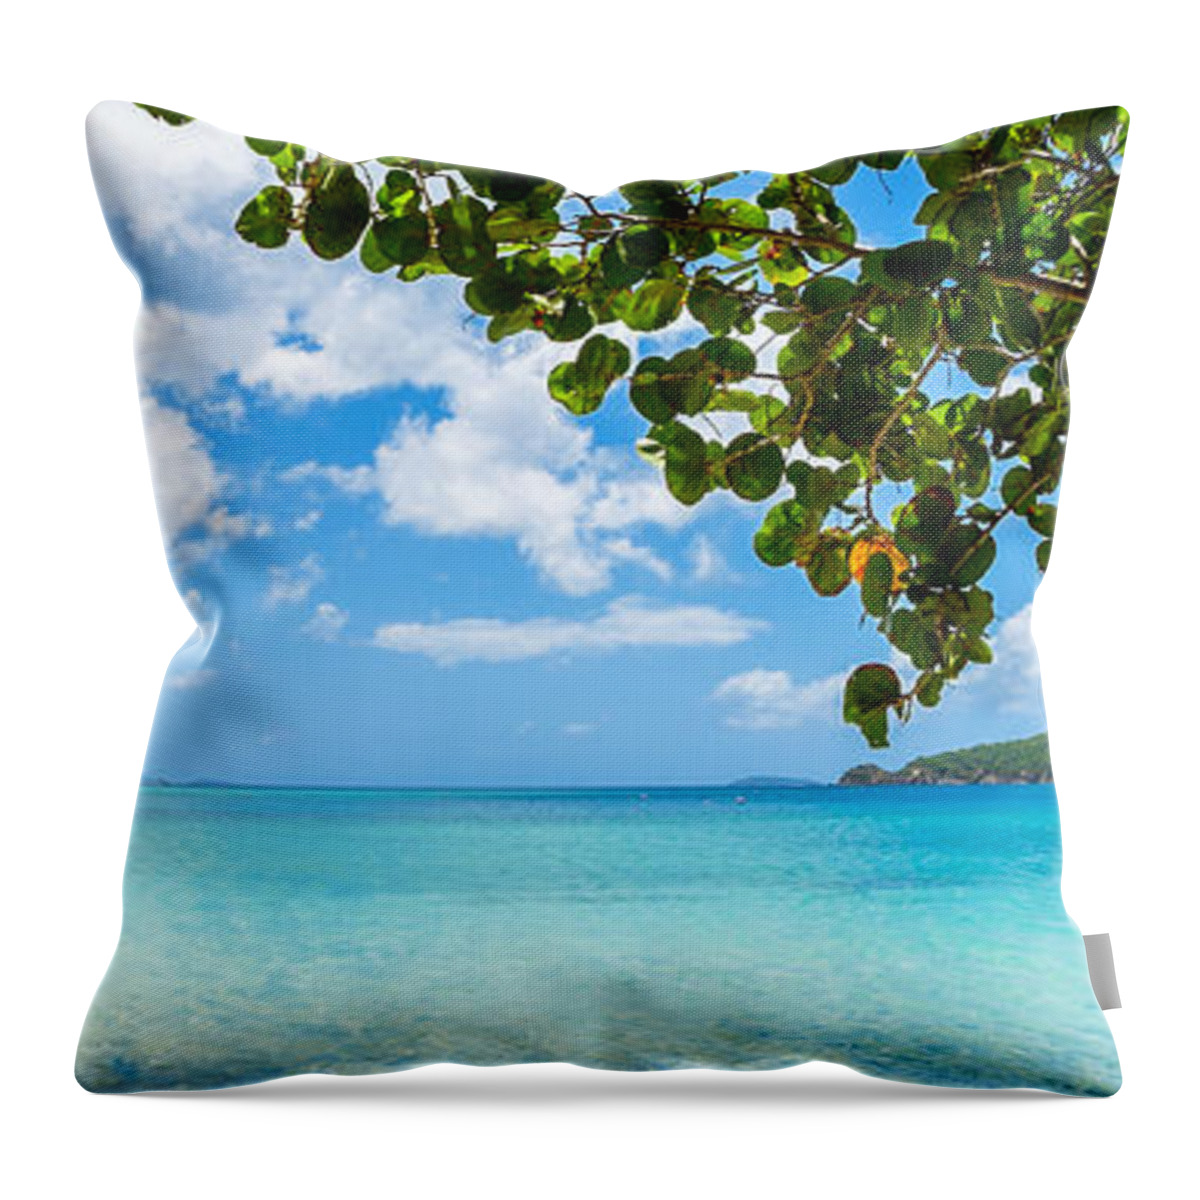 Caribbean Throw Pillow featuring the photograph Beautiful Caribbean beach by Raul Rodriguez